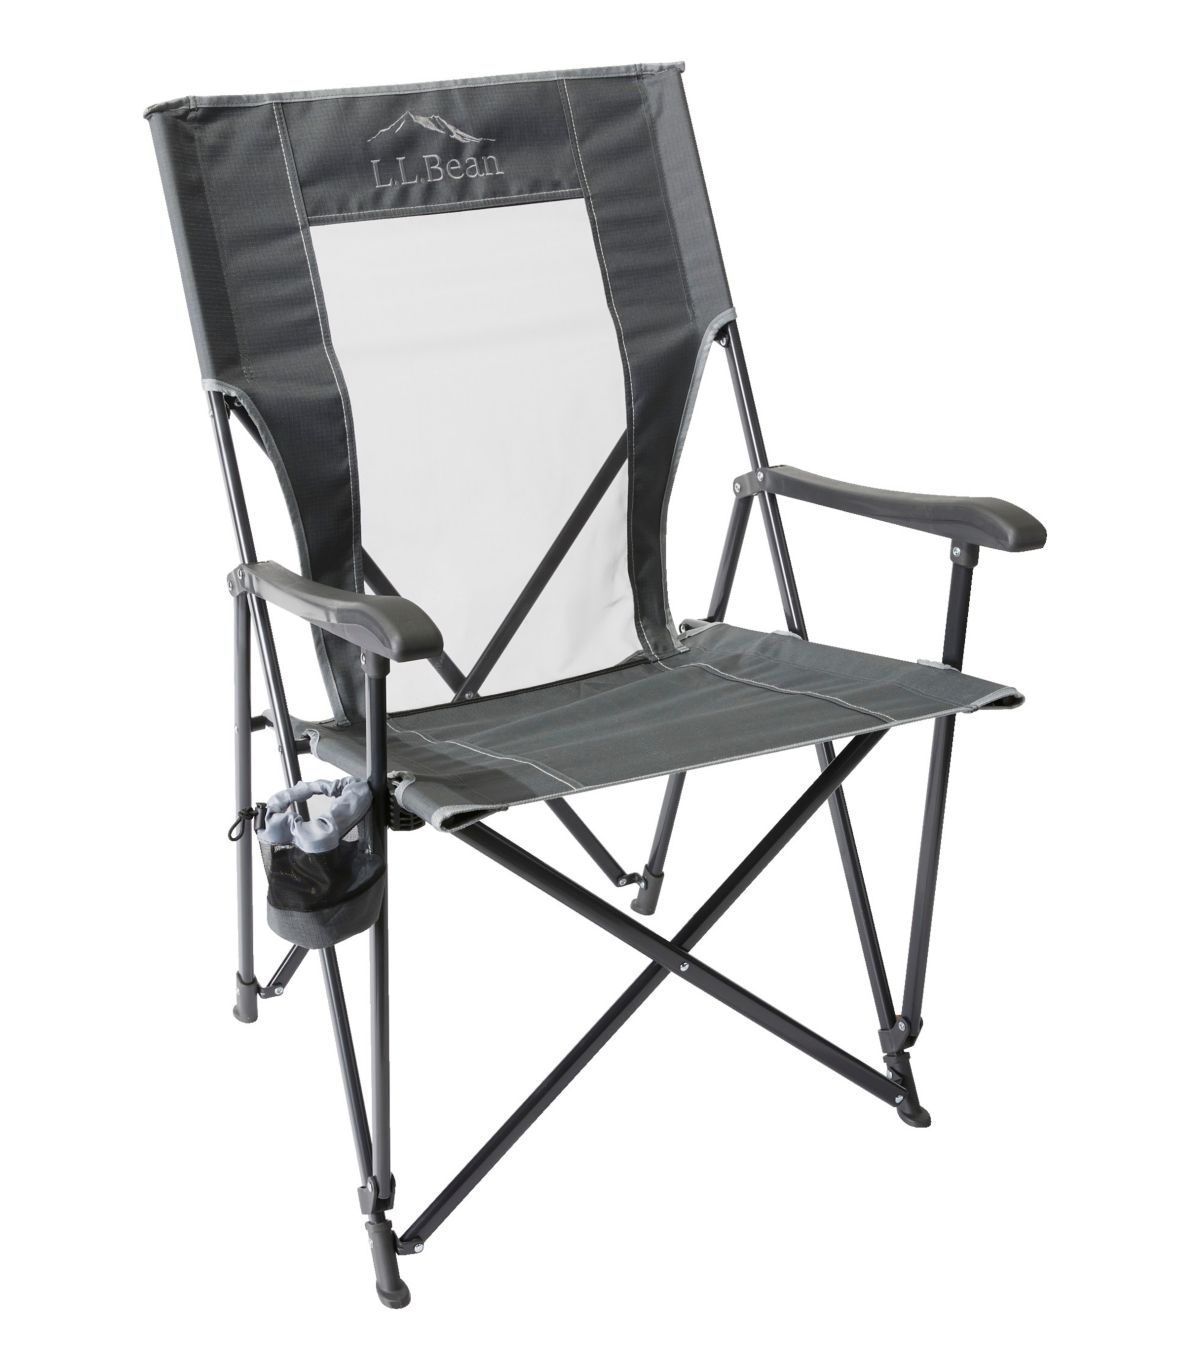 L.L.Bean Easy Comfort Camp Chair Max